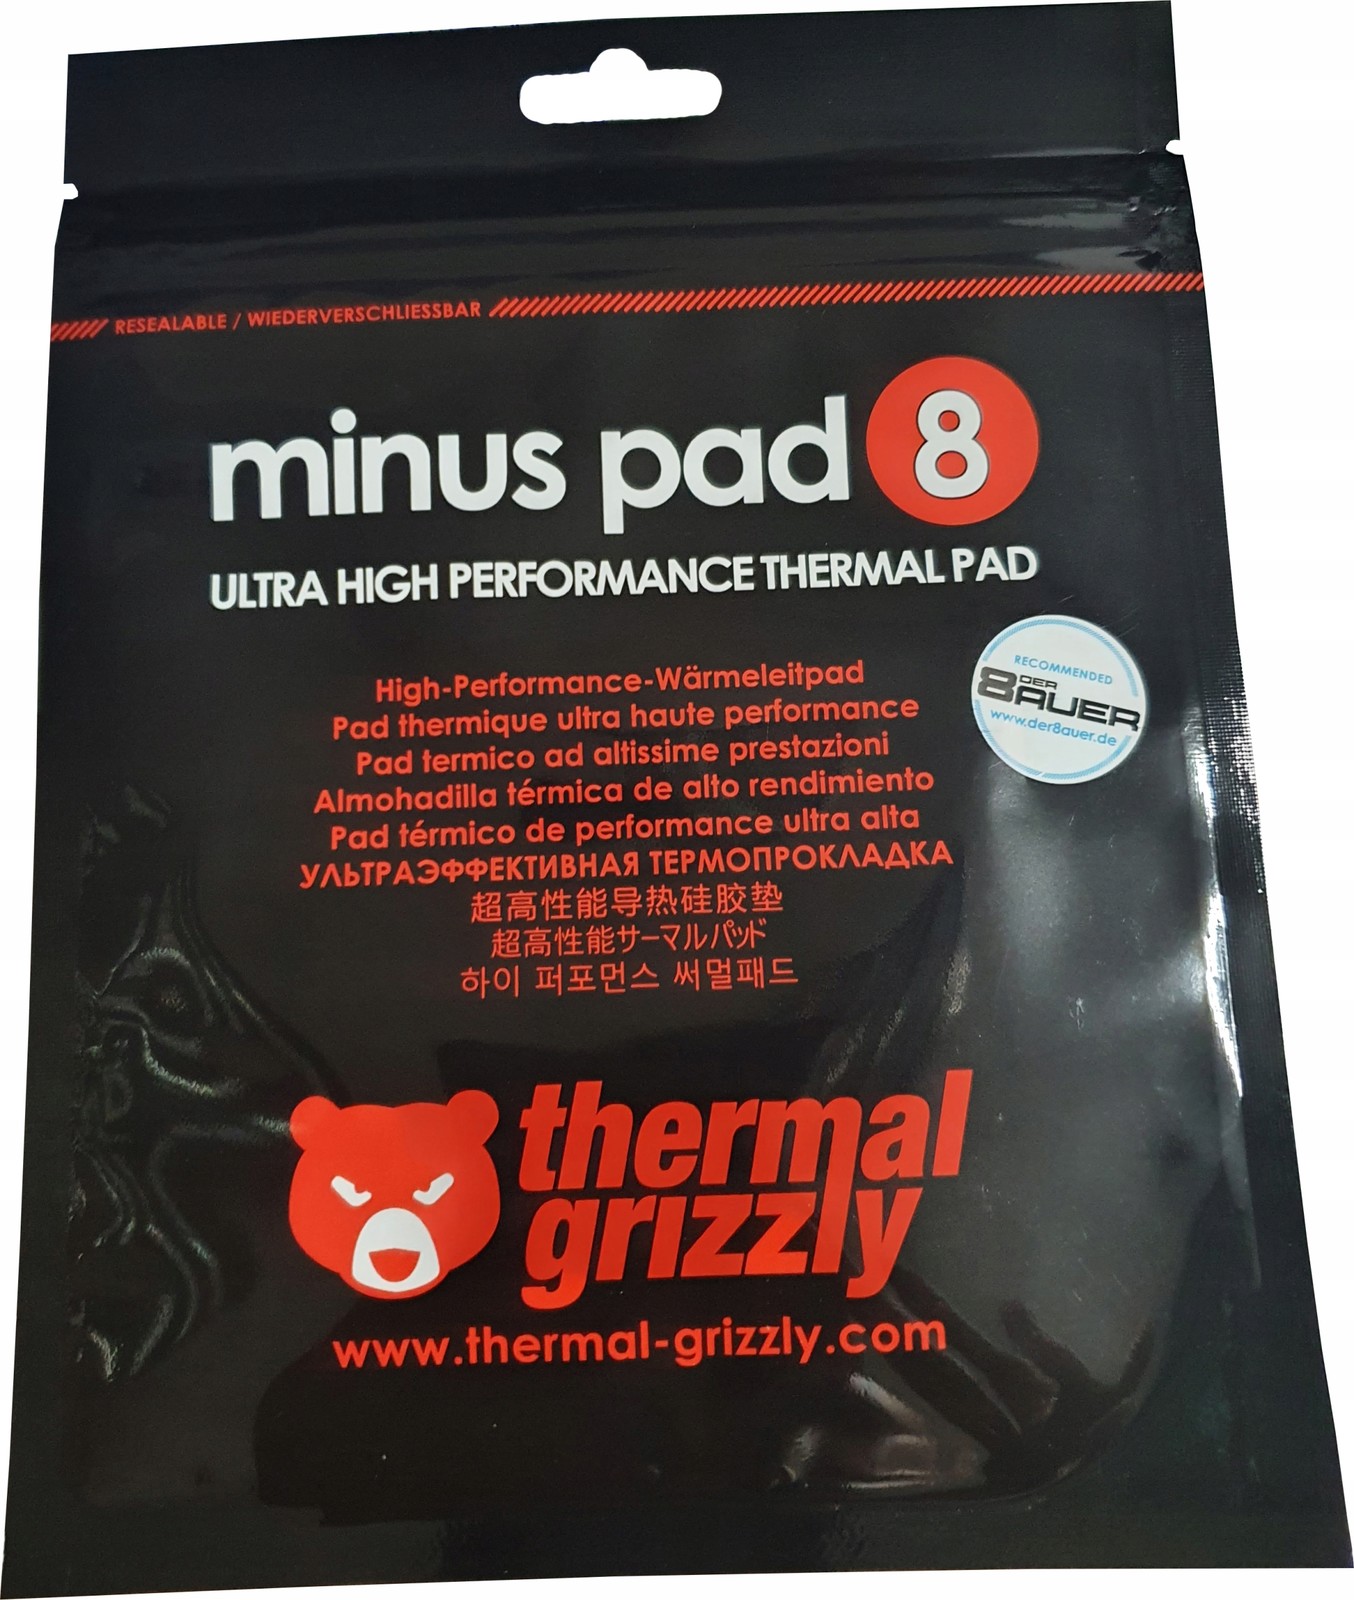 Thermal Grizzly Minus Pad 8 100x100x1,5mm thermopad, termopad